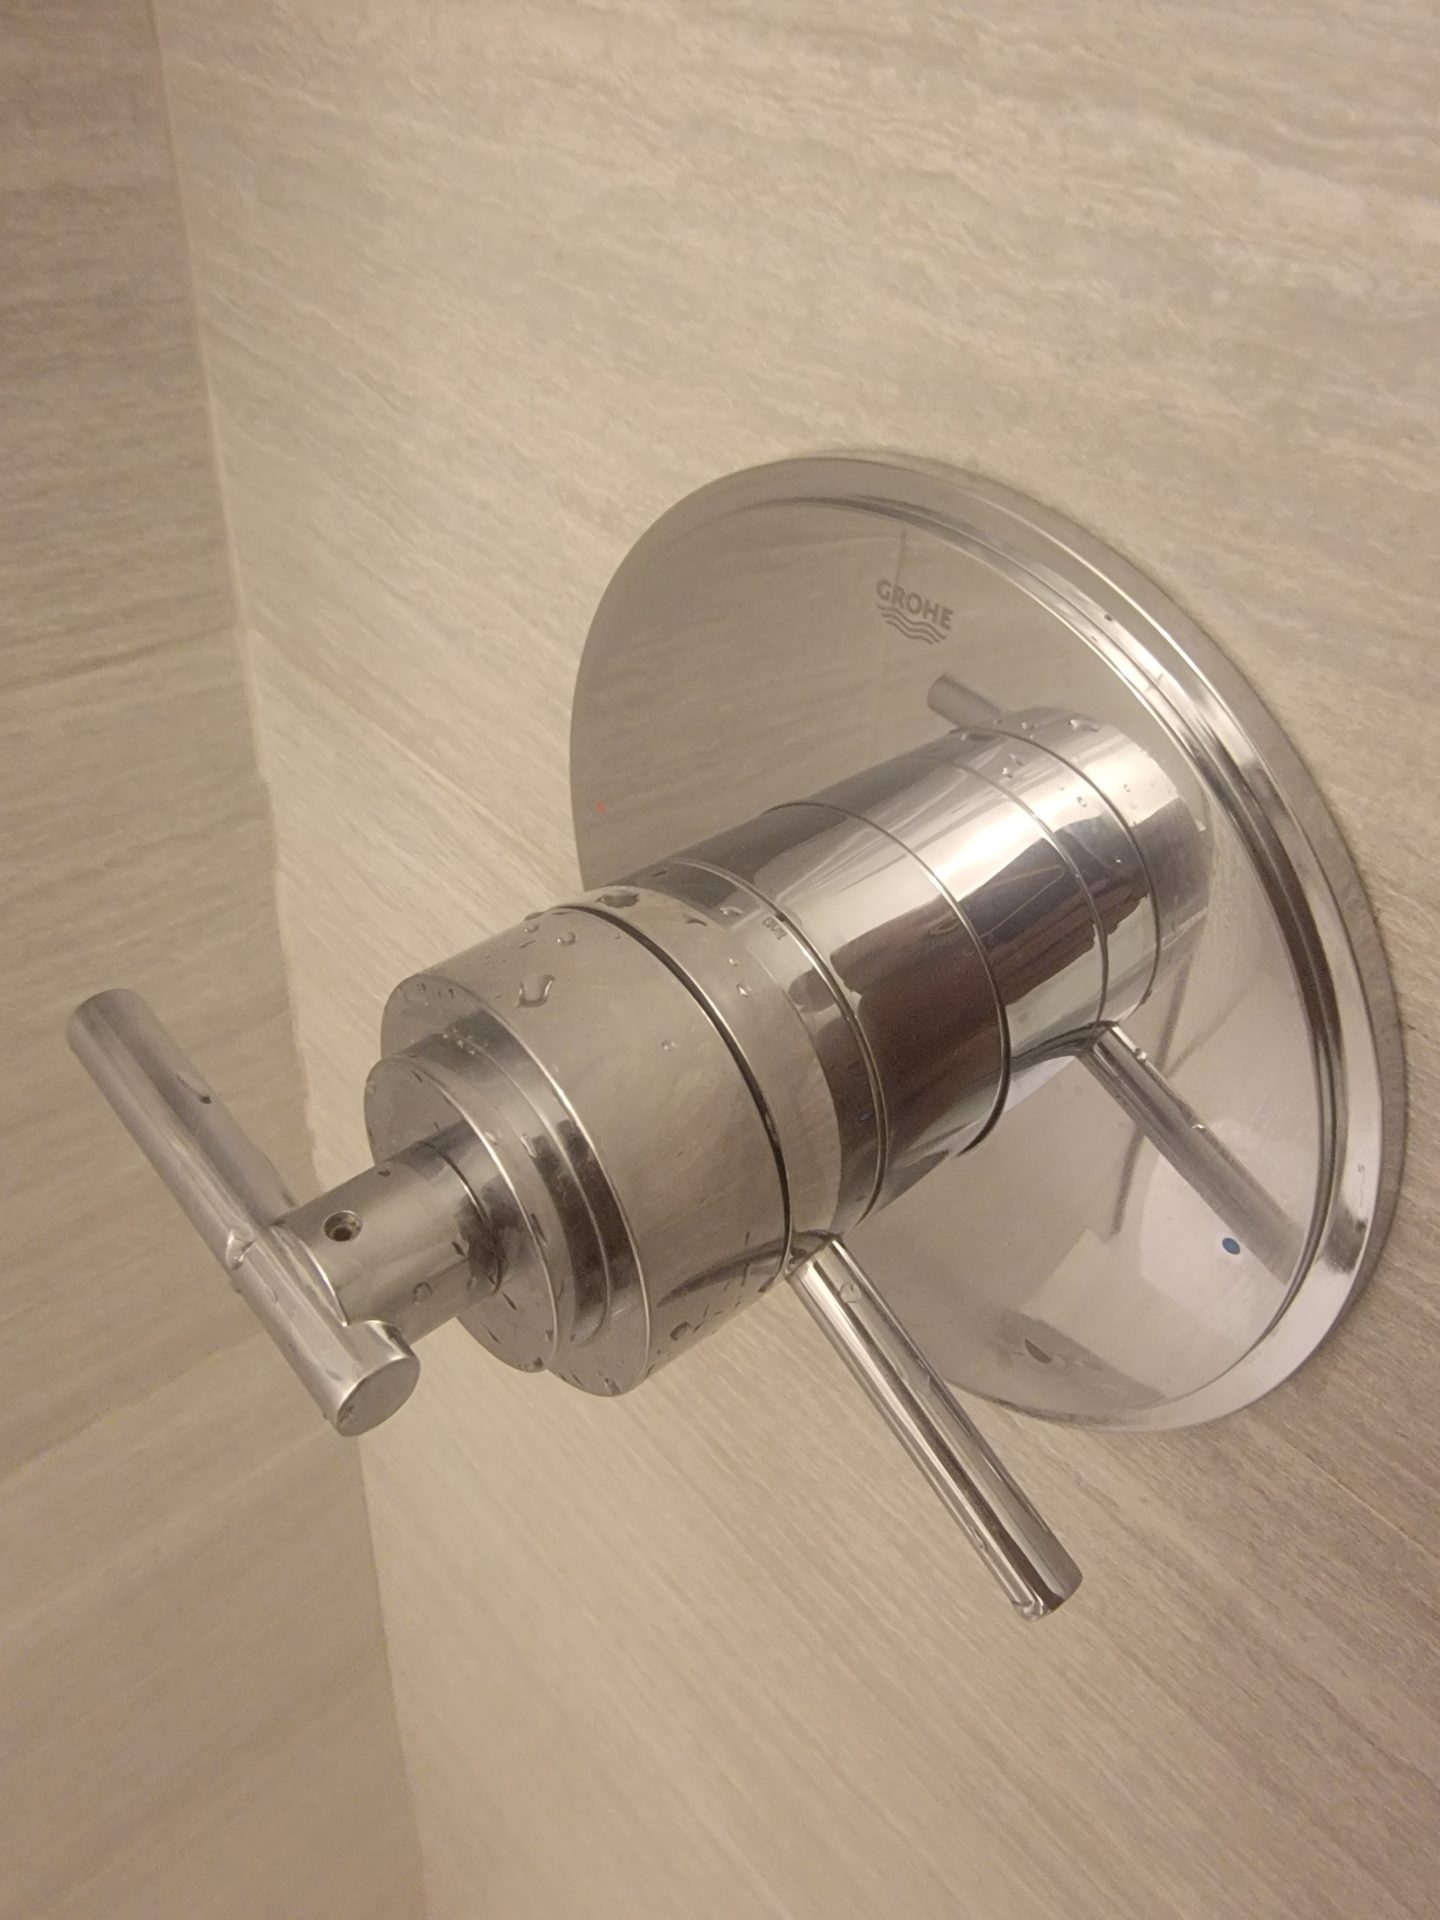 a silver faucet in a bathroom